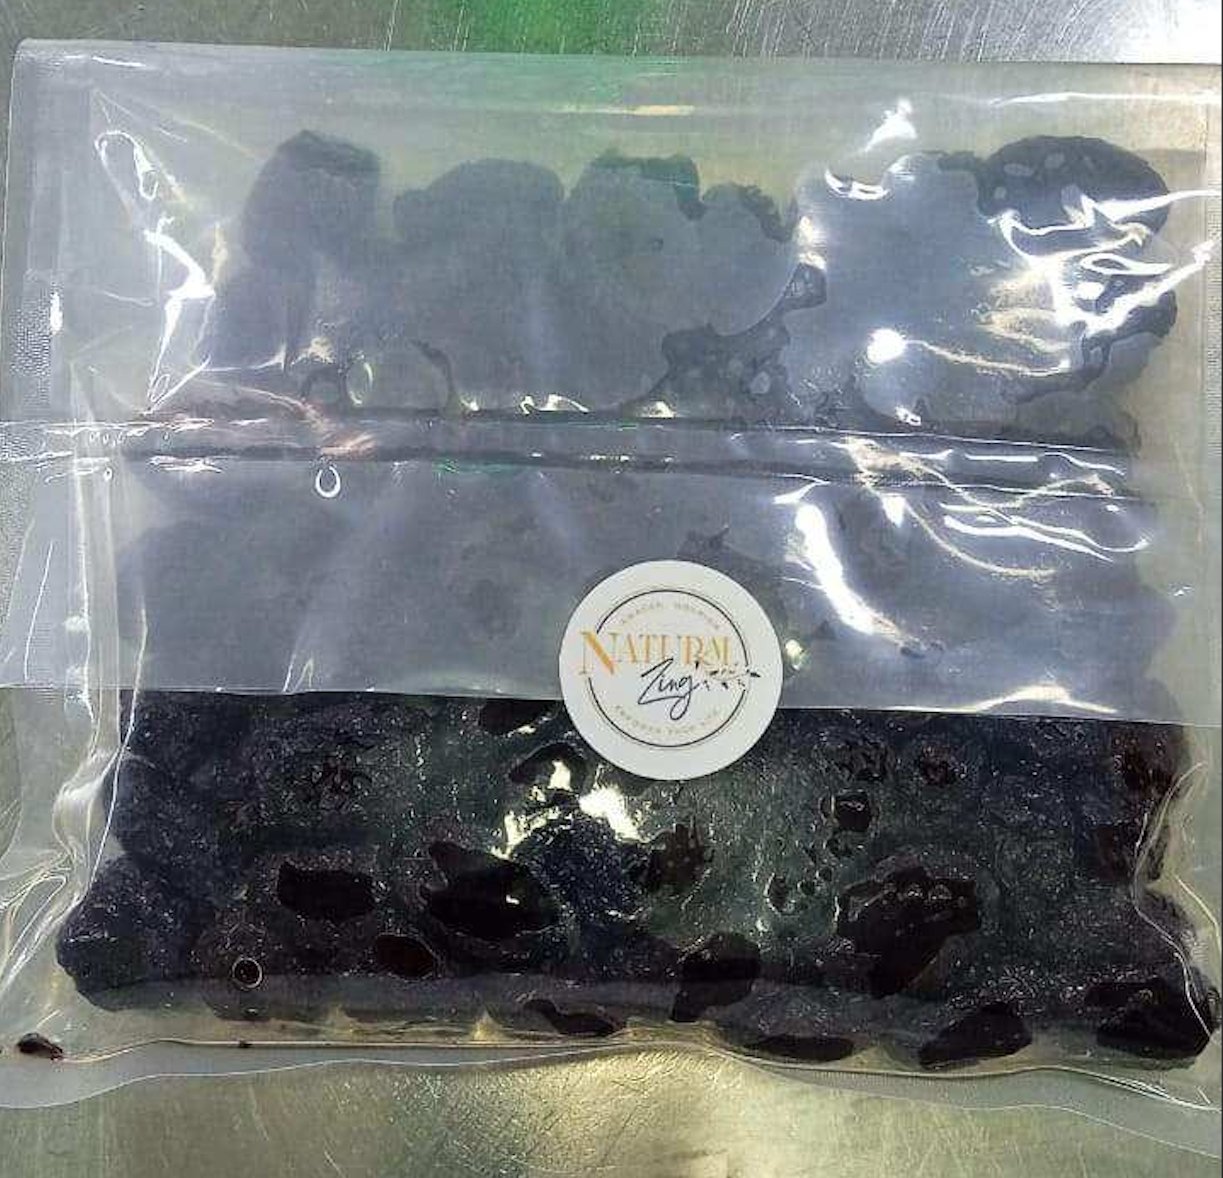 Peruvian Black Dried Olives (Aji Spiced, Pitted) 5oz